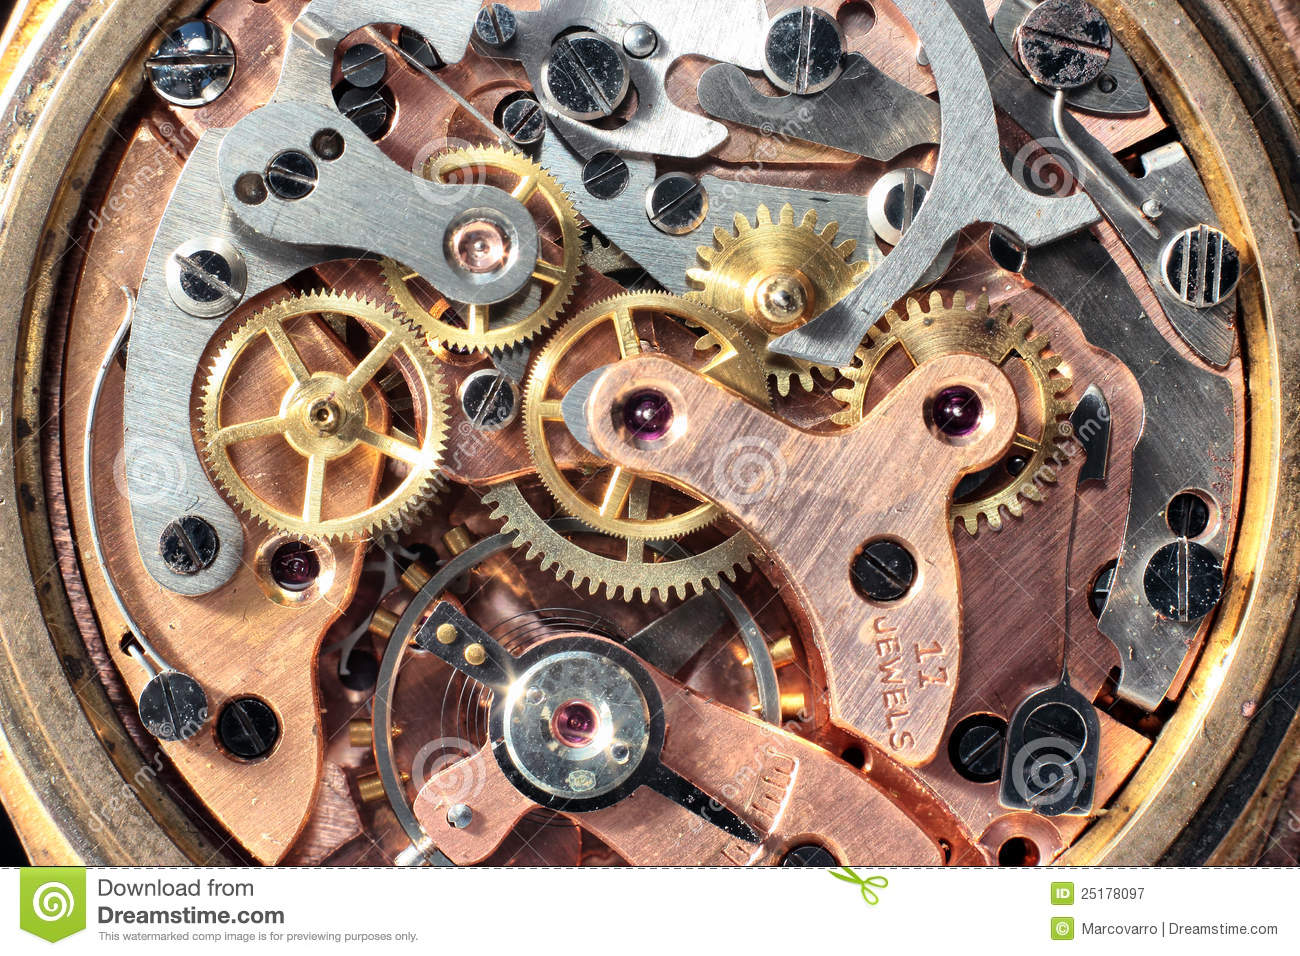 Images of Clockwork | 1300x956